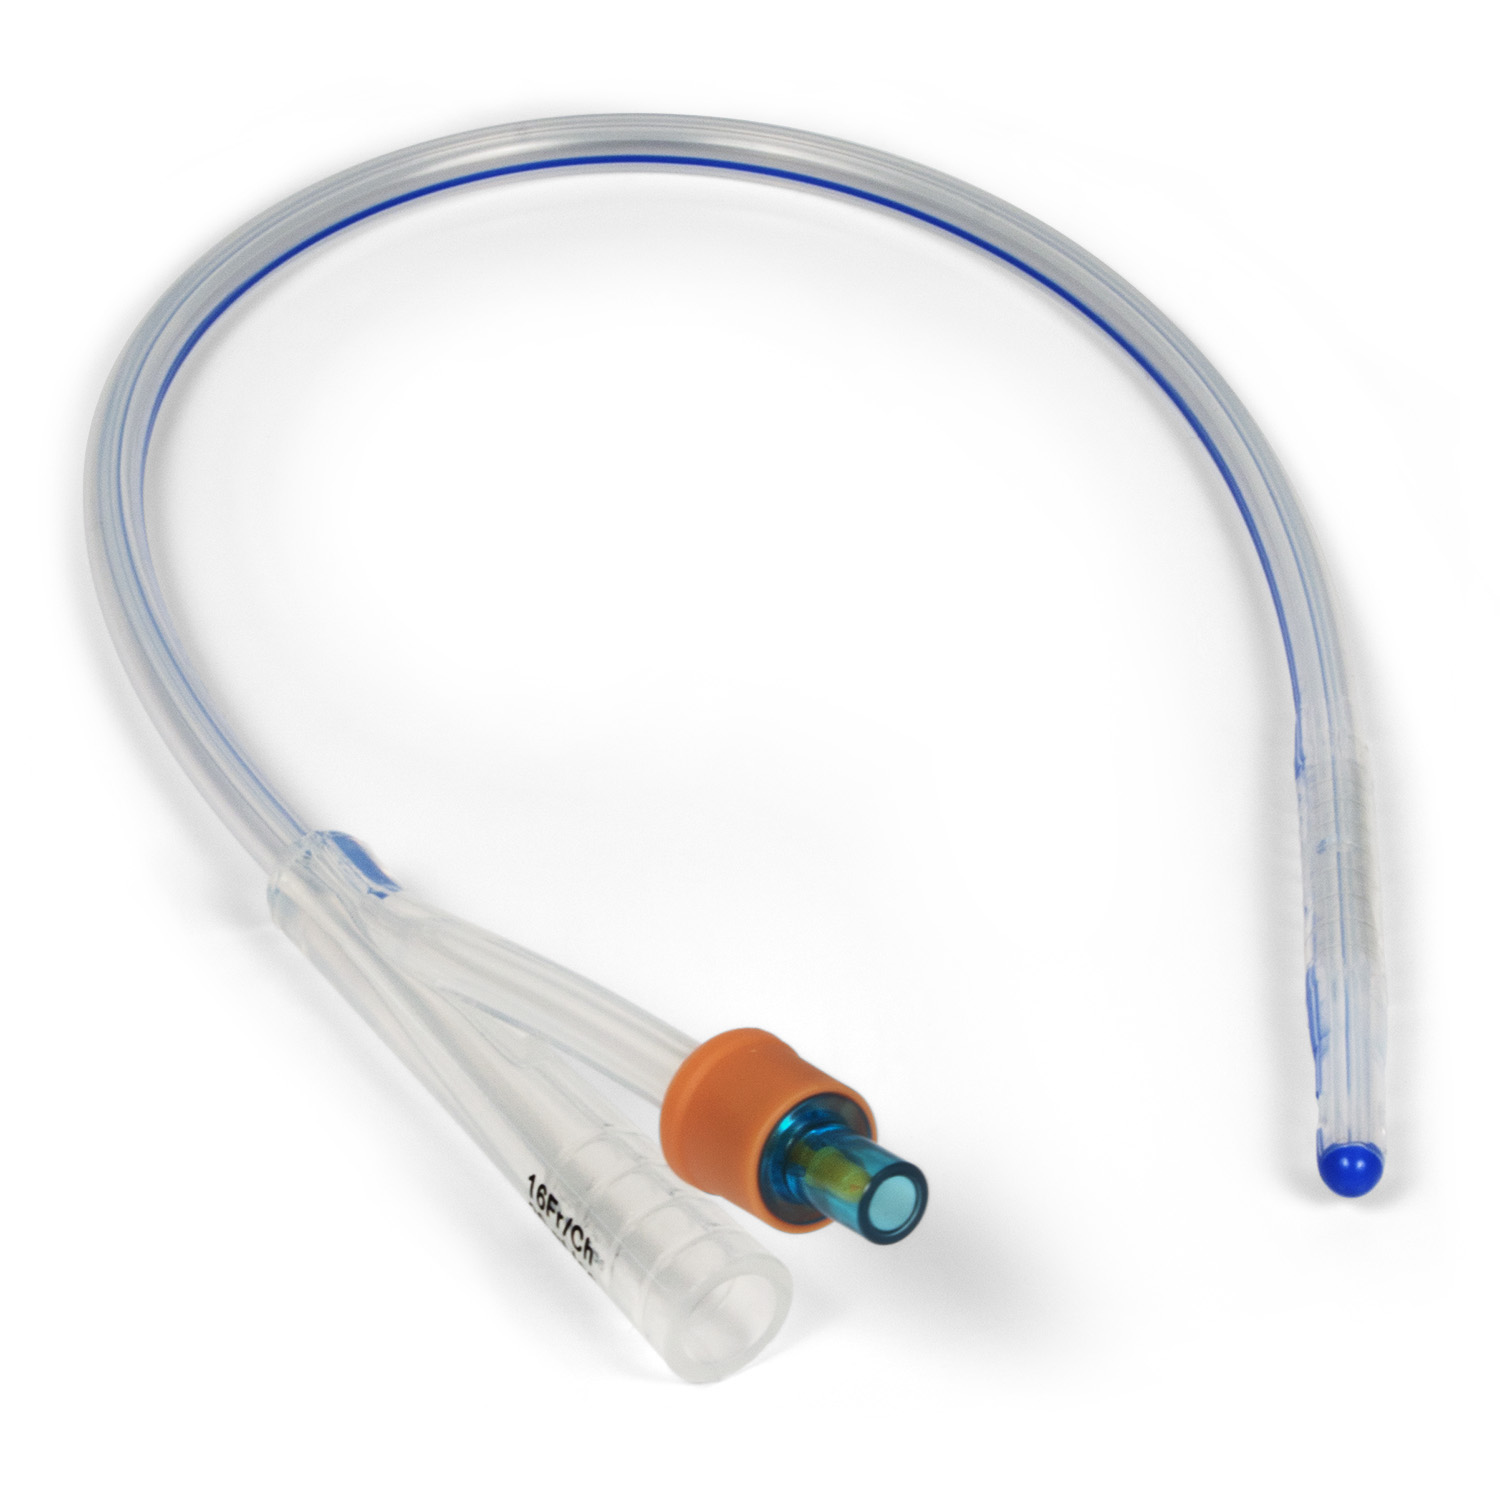 Silicone Foley Catheters 2-way Standard - 16FR / 5-10cc